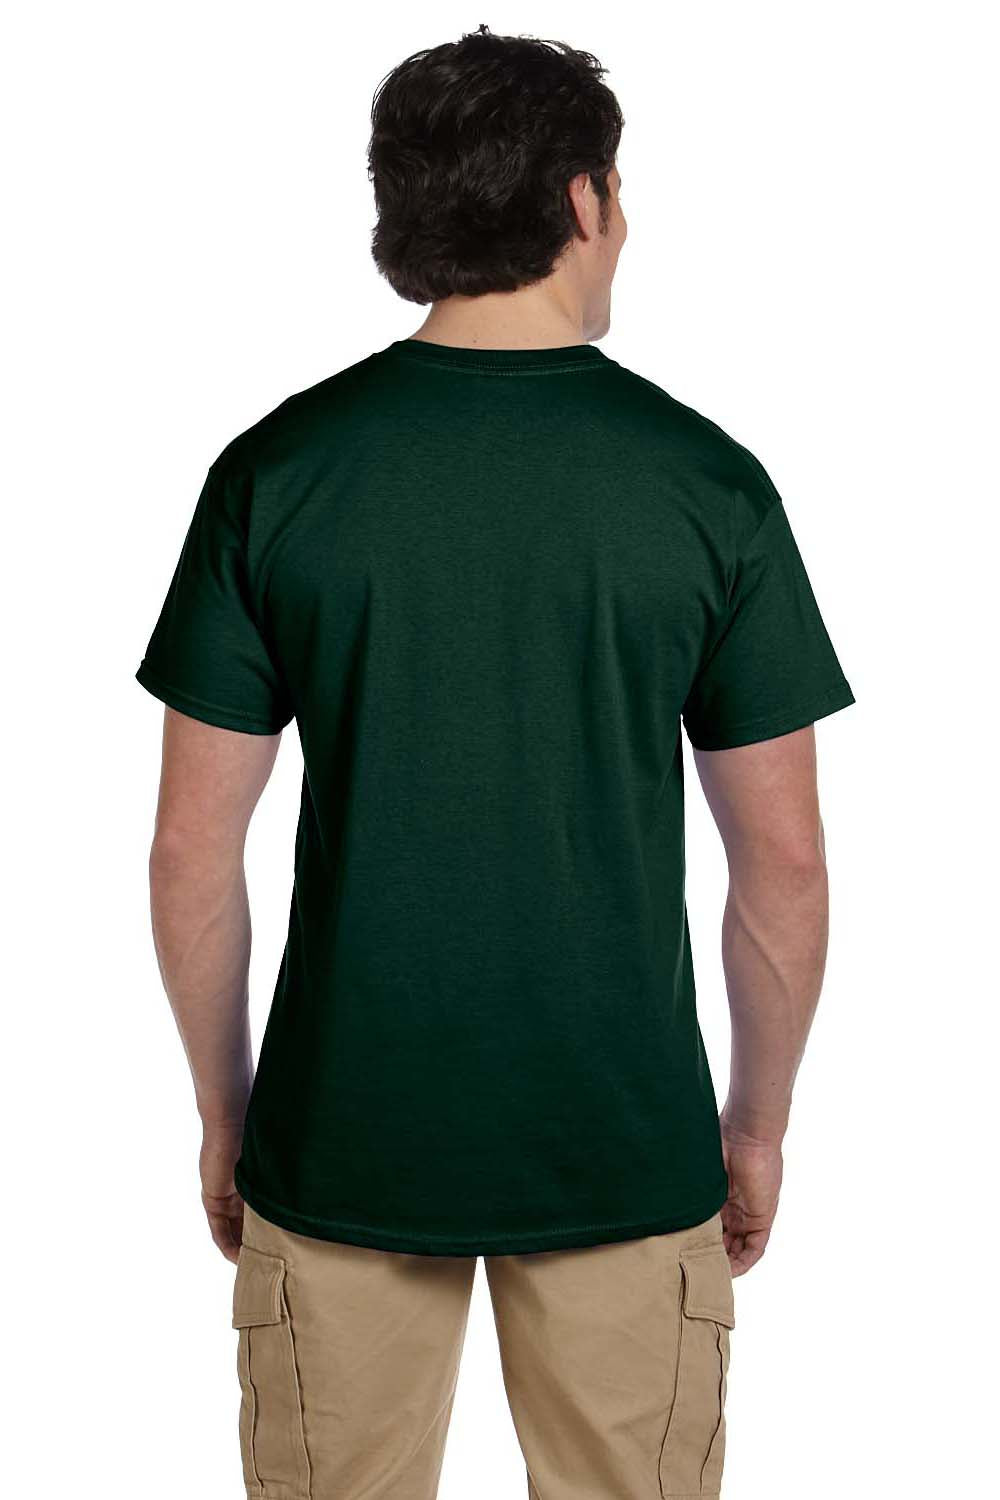 Hanes 5170 Mens EcoSmart Short Sleeve Crewneck T-Shirt Forest Green Back